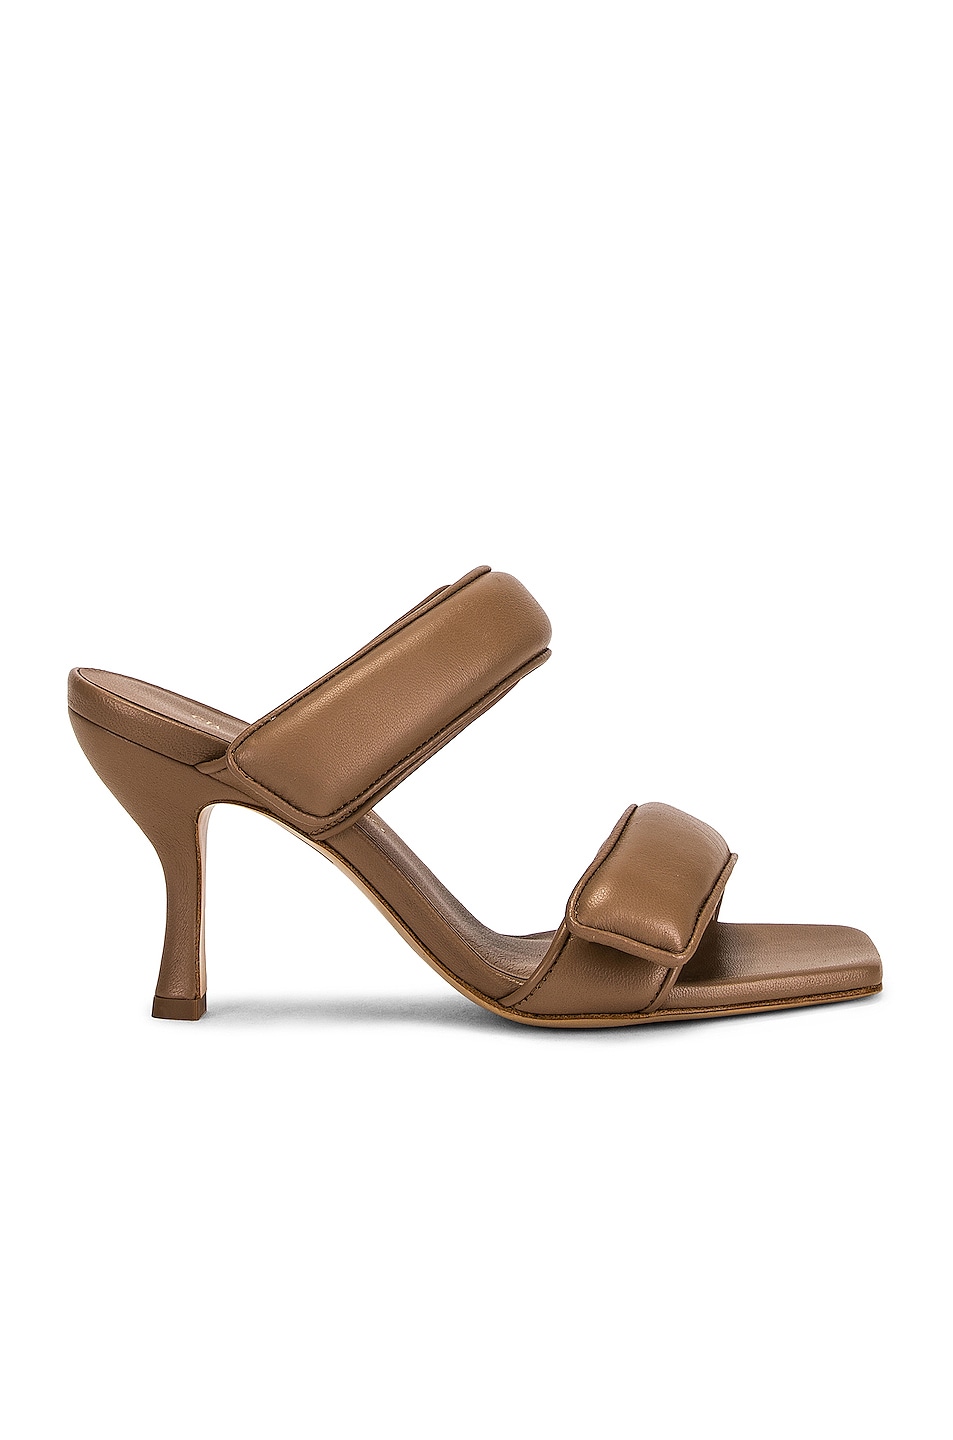 Image 1 of GIA BORGHINI x Pernille Teisbaek Two Strap Sandal in Nude Brown